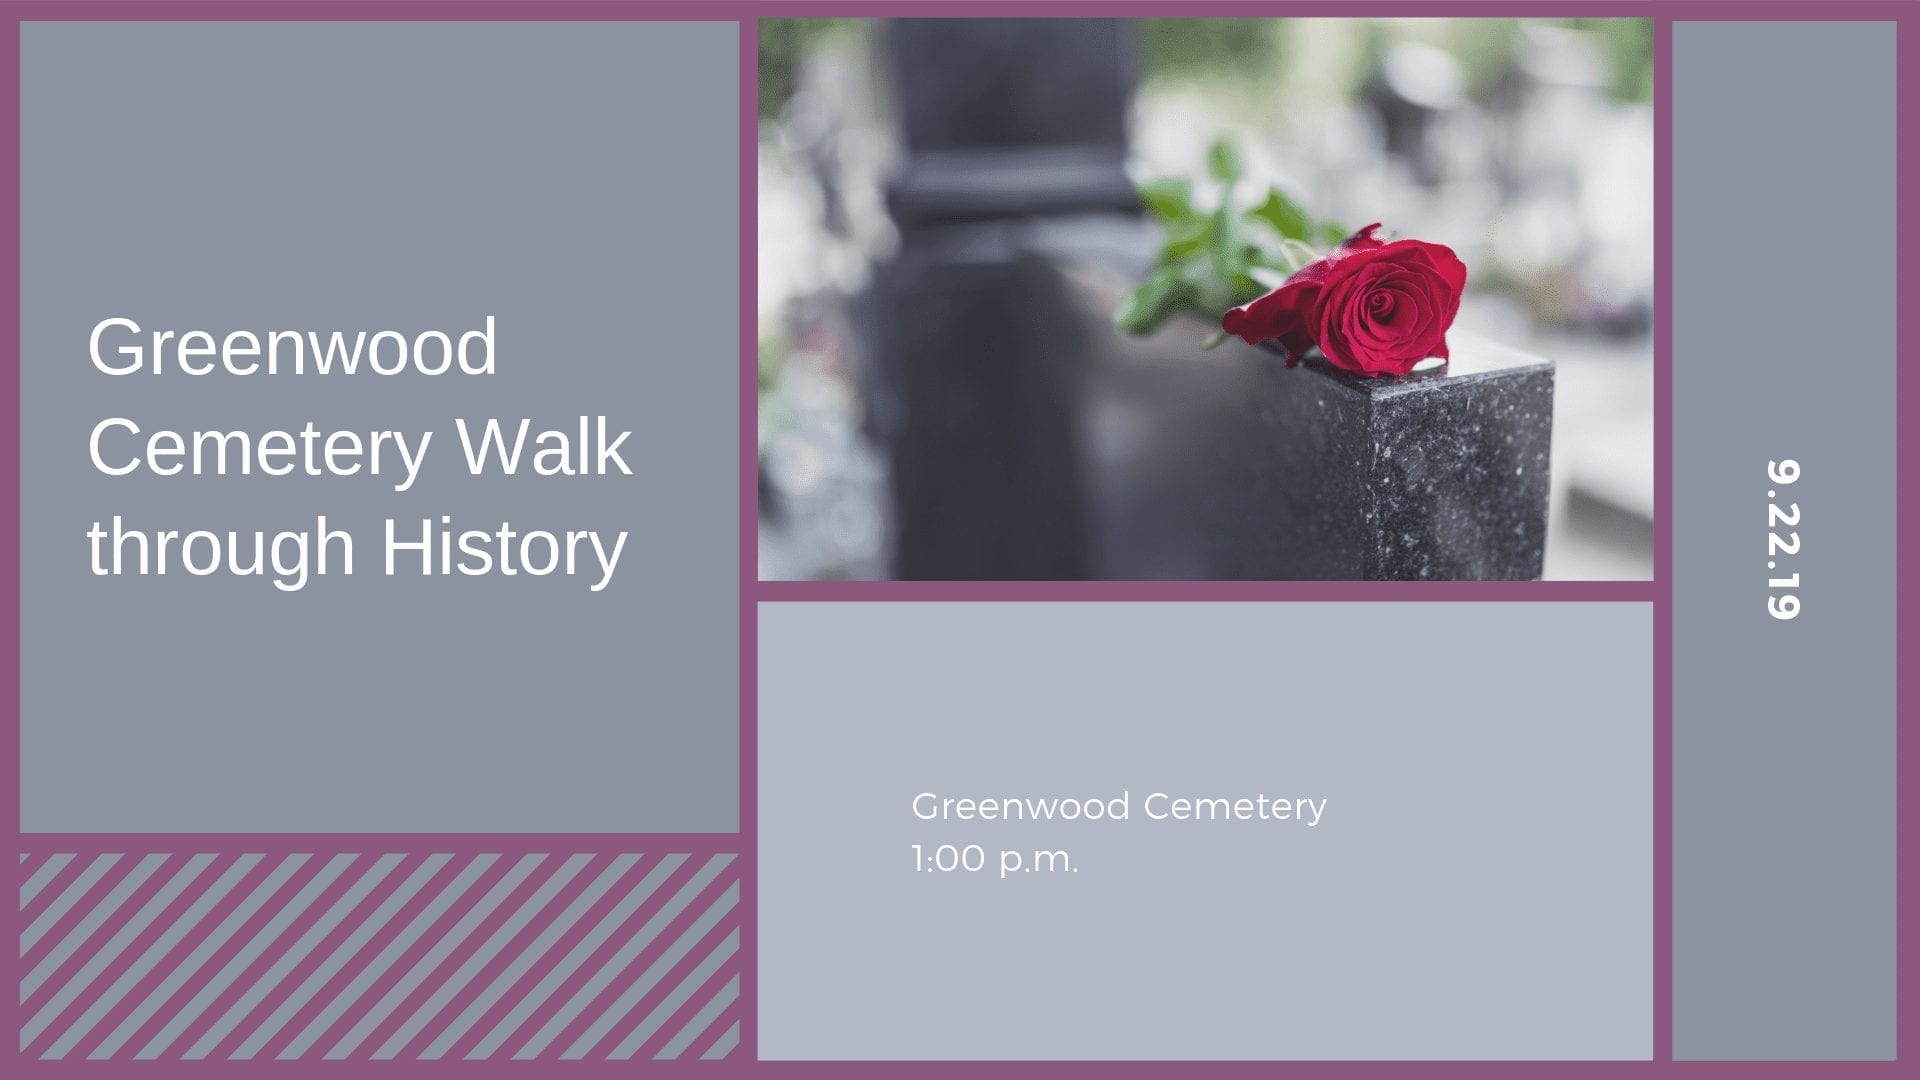 Greenwood Cemetery Walk through History